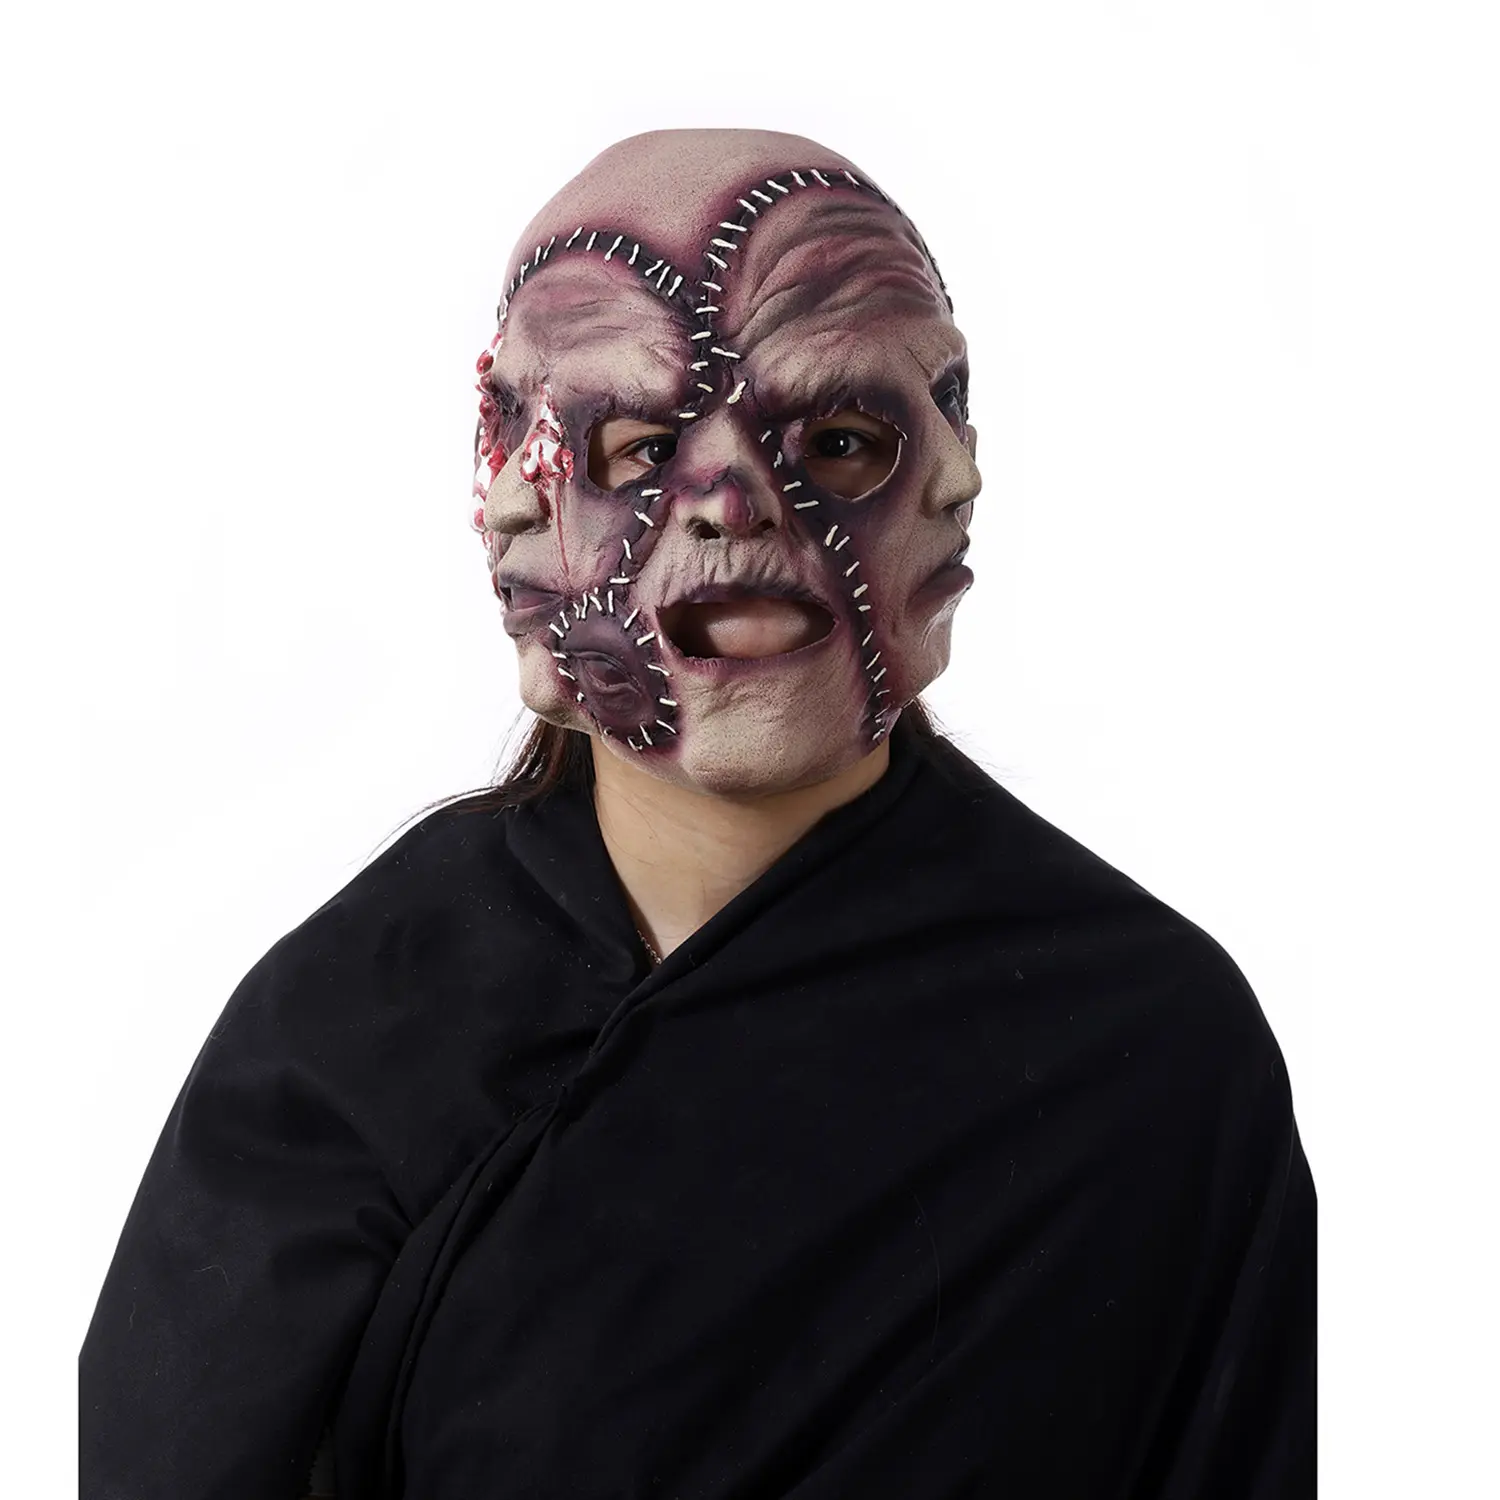 Máscara de Halloween WY Nova máscara de látex realista de três caras para homens máscara de decoração de festa